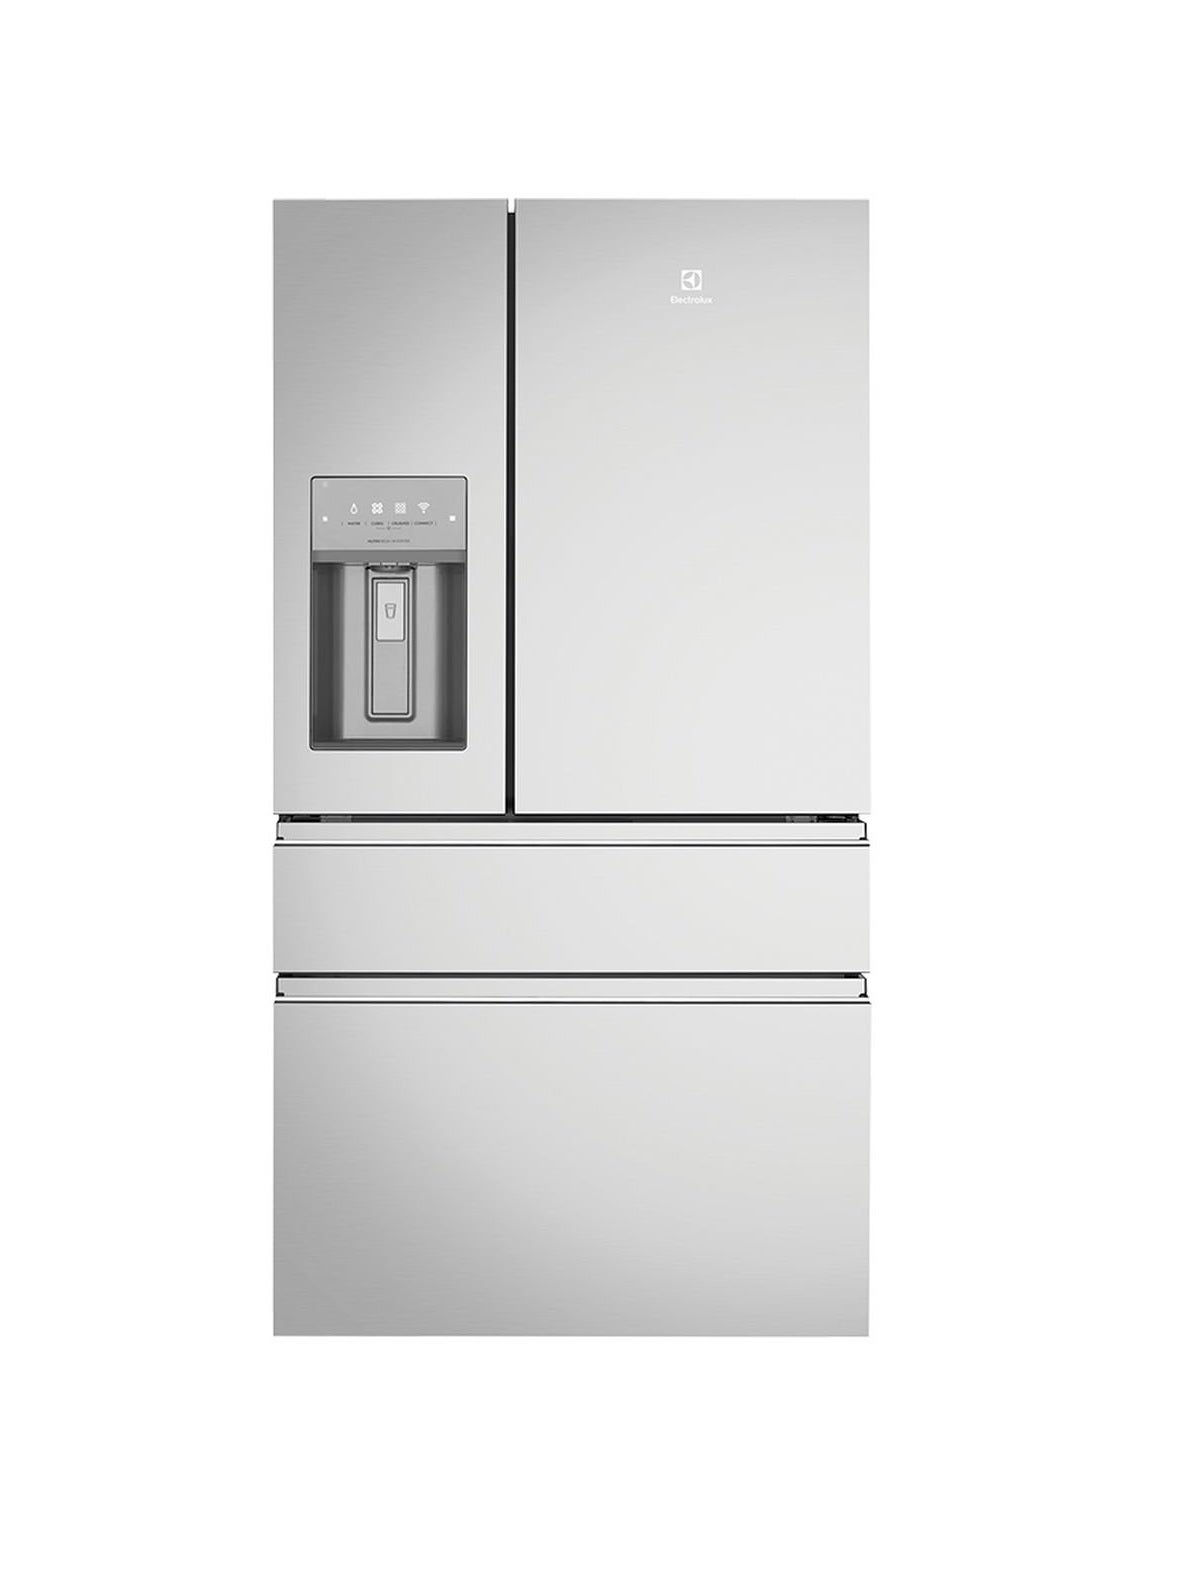 Electrolux EHE6899SA Refrigerator